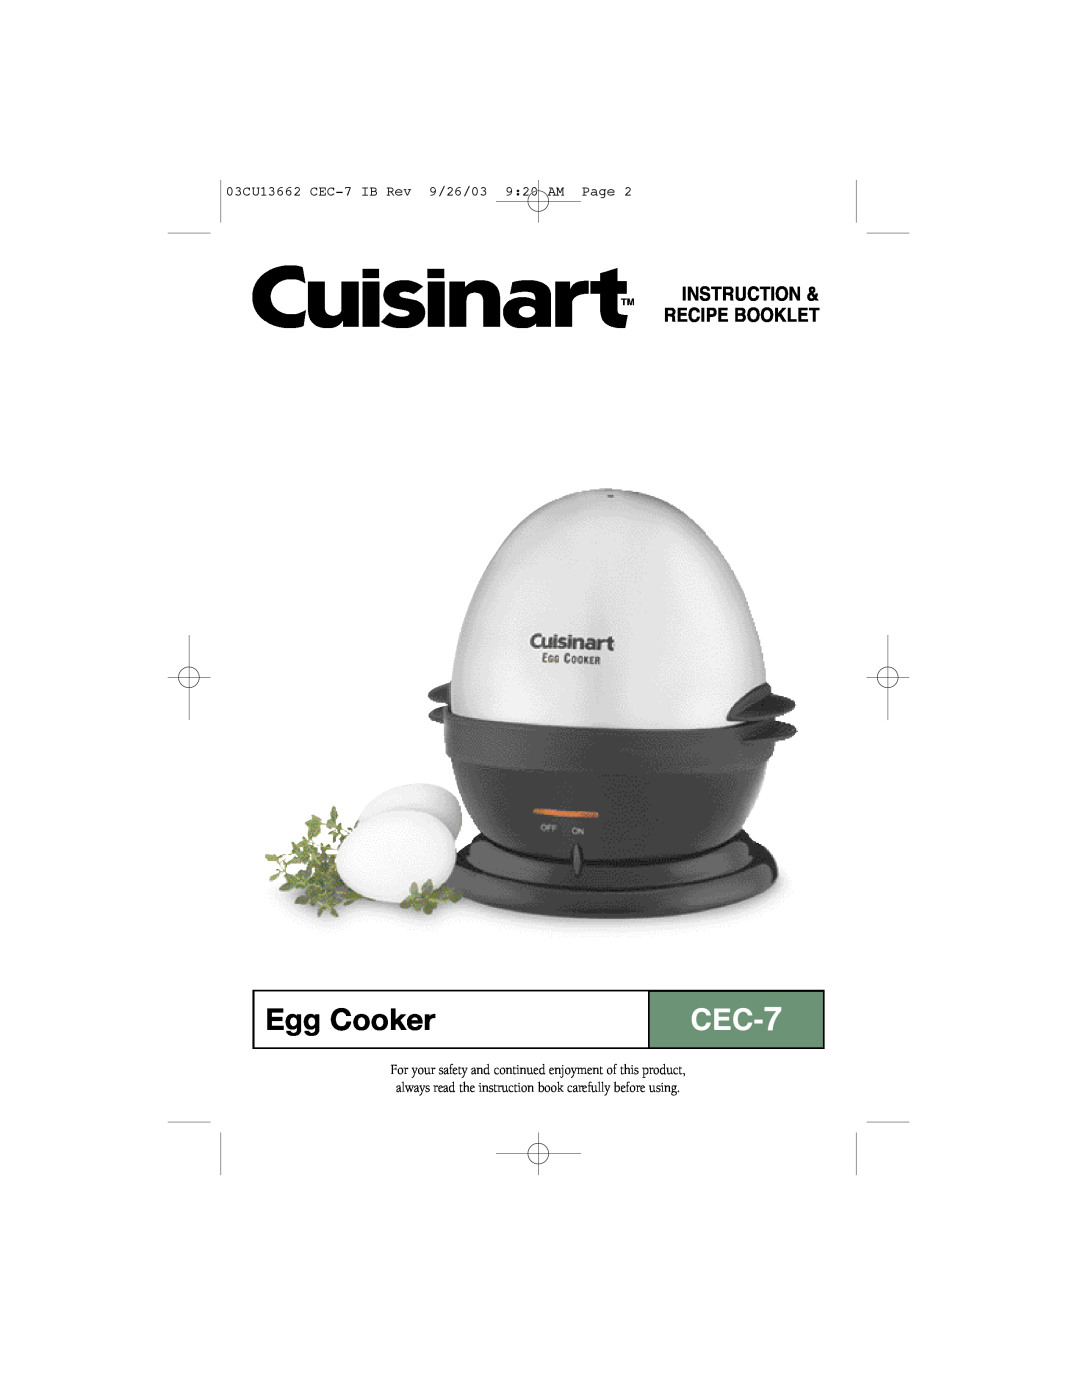 Cuisinart manual Egg Cooker, Instruction Recipe Booklet, 03CU13662 CEC-7 IB Rev 9/26/03 920 AM Page 